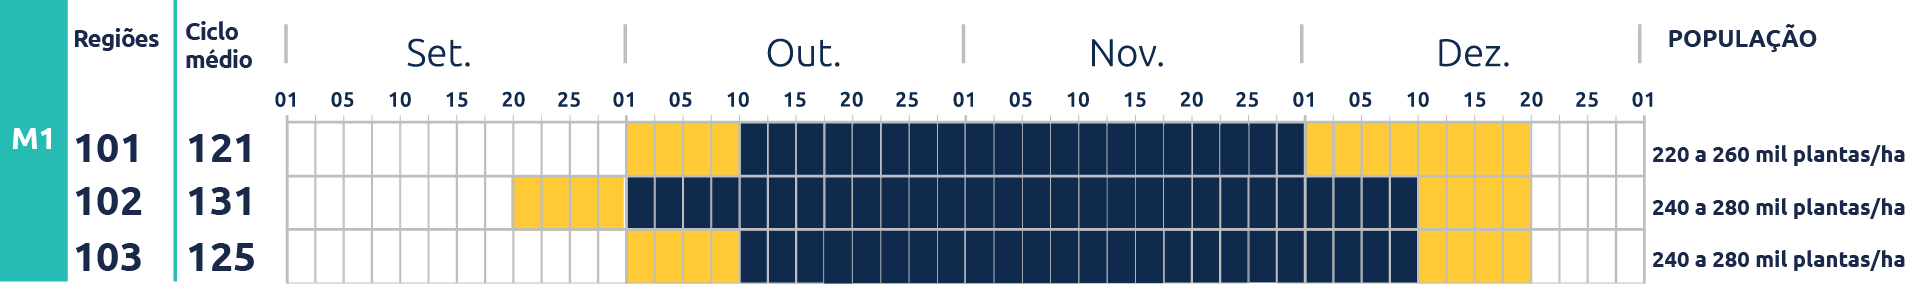 Tabela do cultivar NS 6010 IPRO